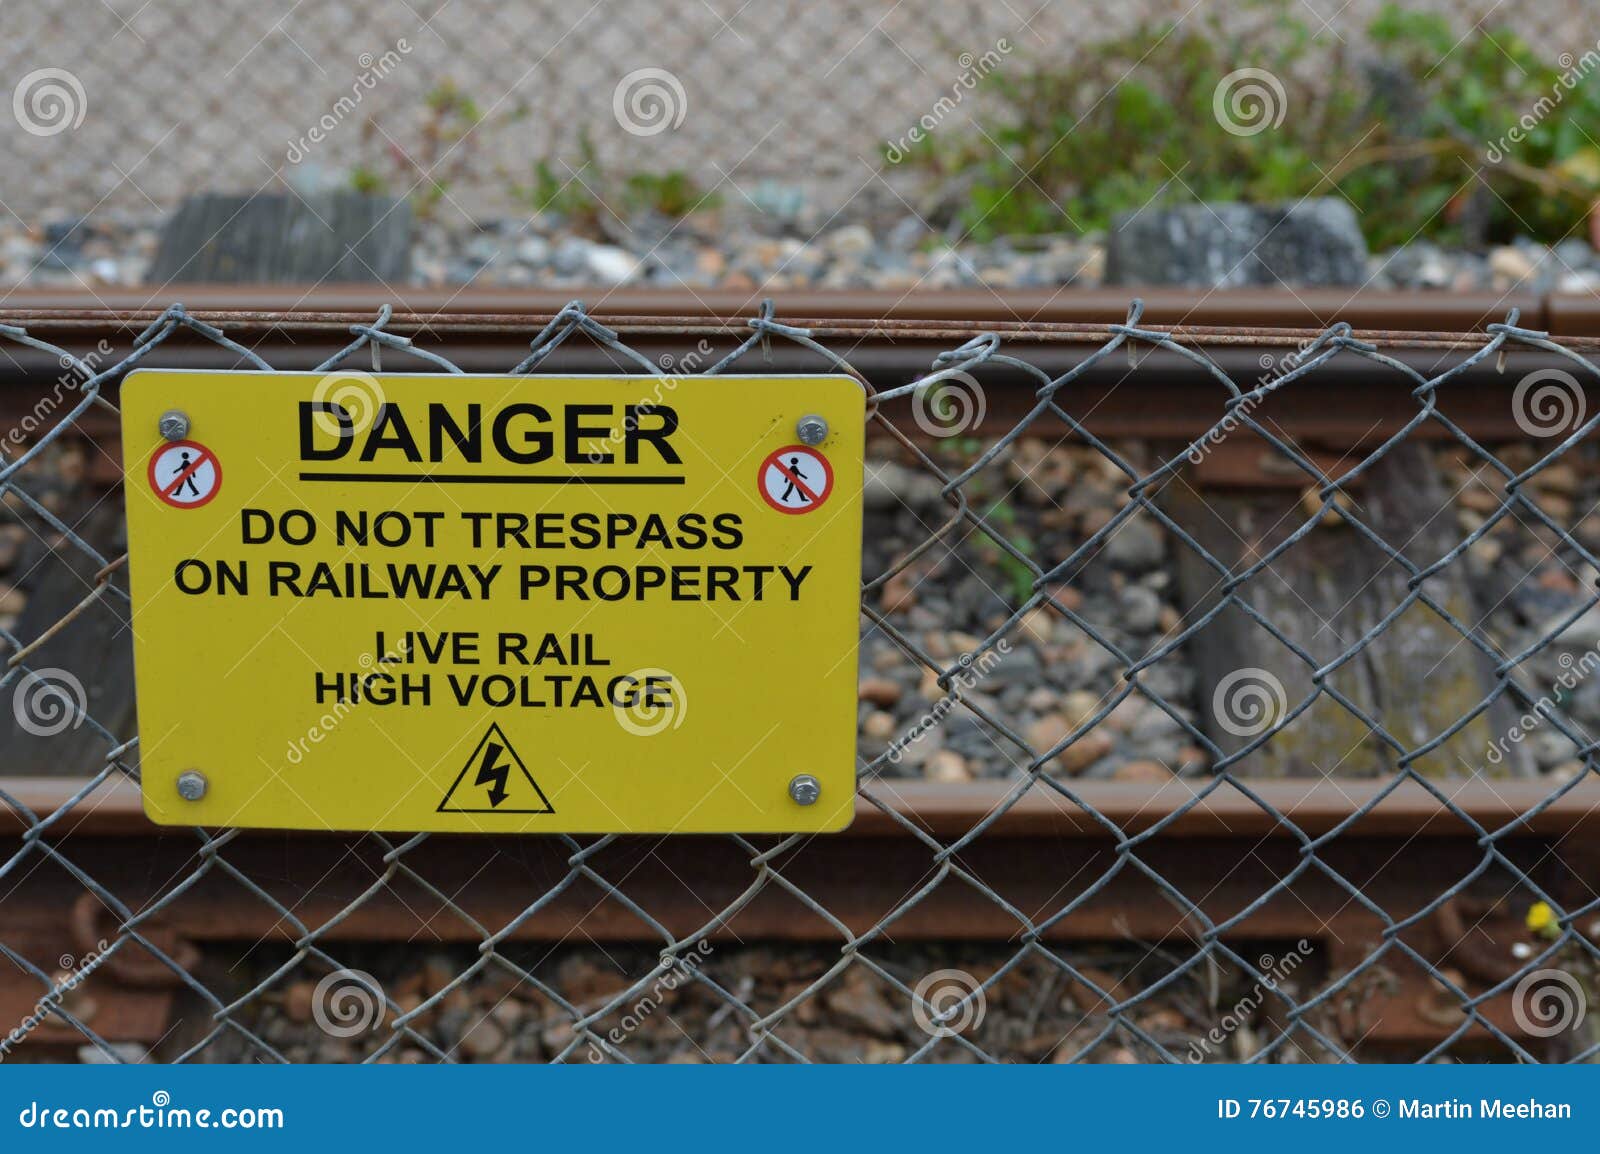 danger do not trespass sign.